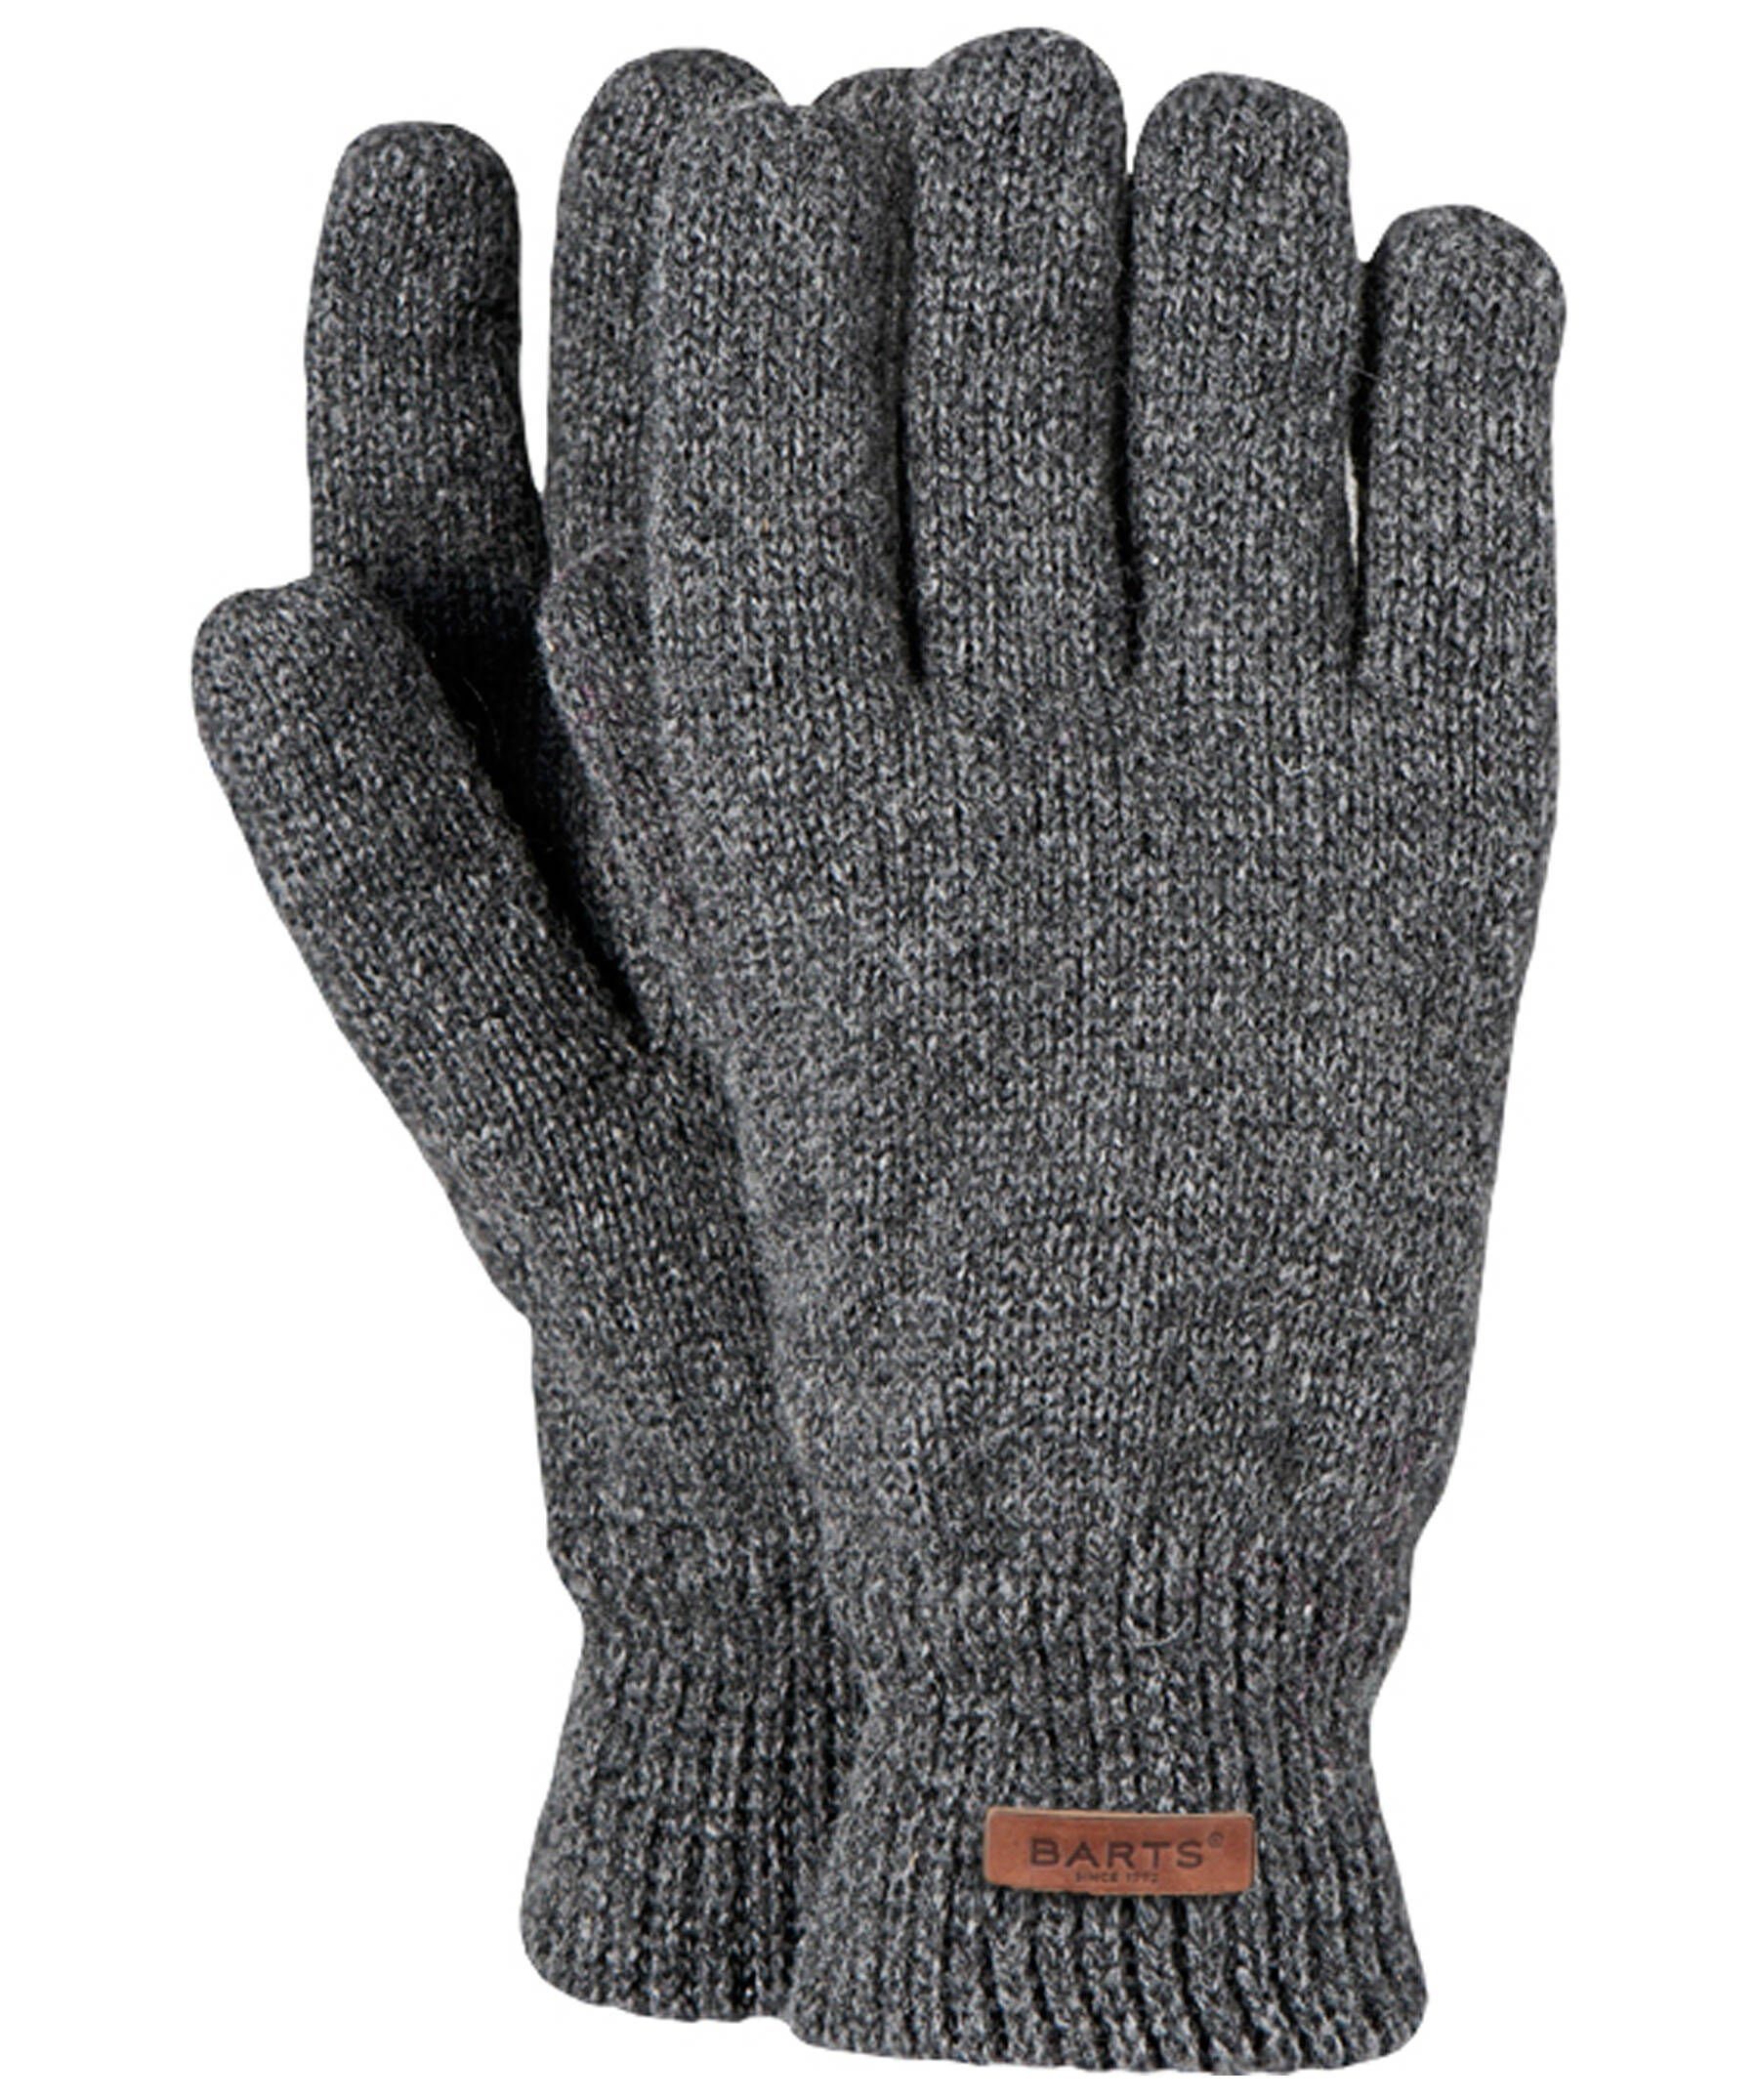 Haakon Skihandschuhe Handschuhe Herren grau / Fingerhandschuhe Gloves (231) Barts